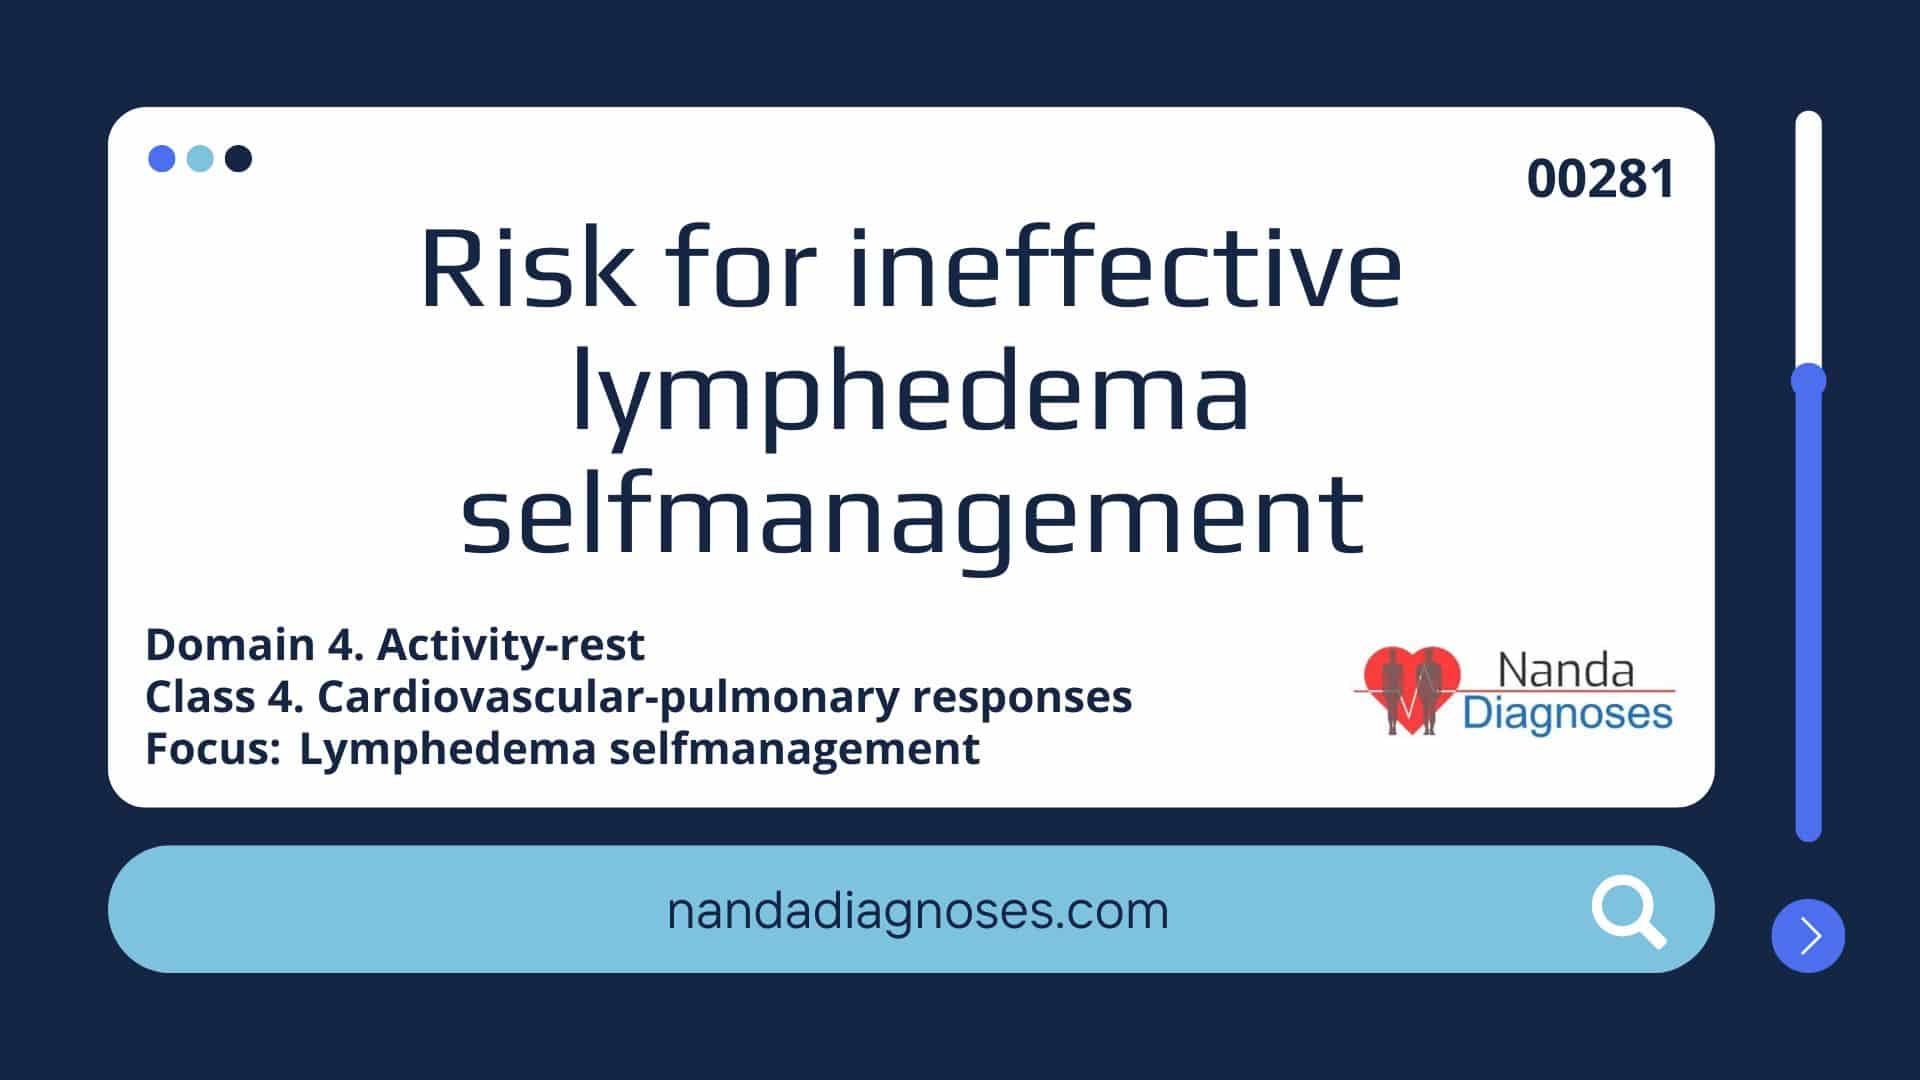 Nursing diagnosis Risk for ineffective lymphedema selfmanagement